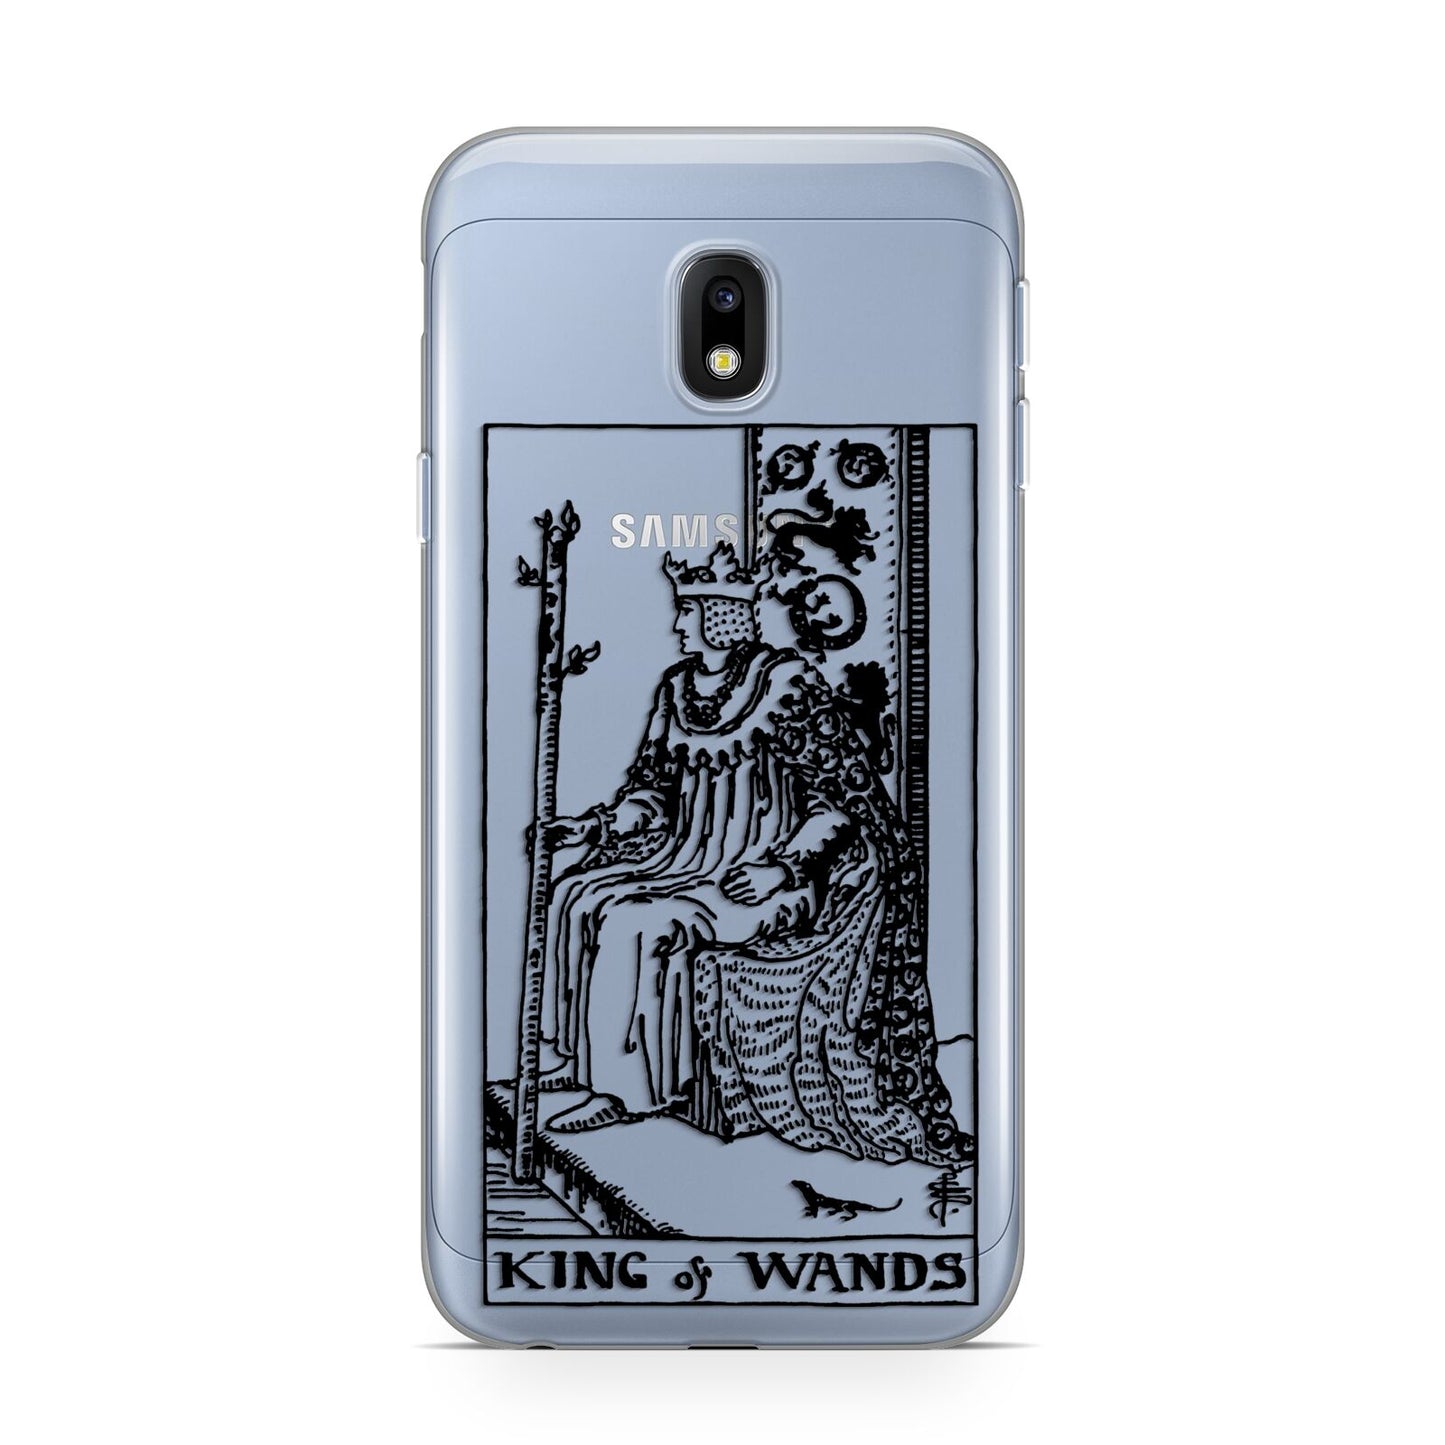 King of Wands Monochrome Samsung Galaxy J3 2017 Case